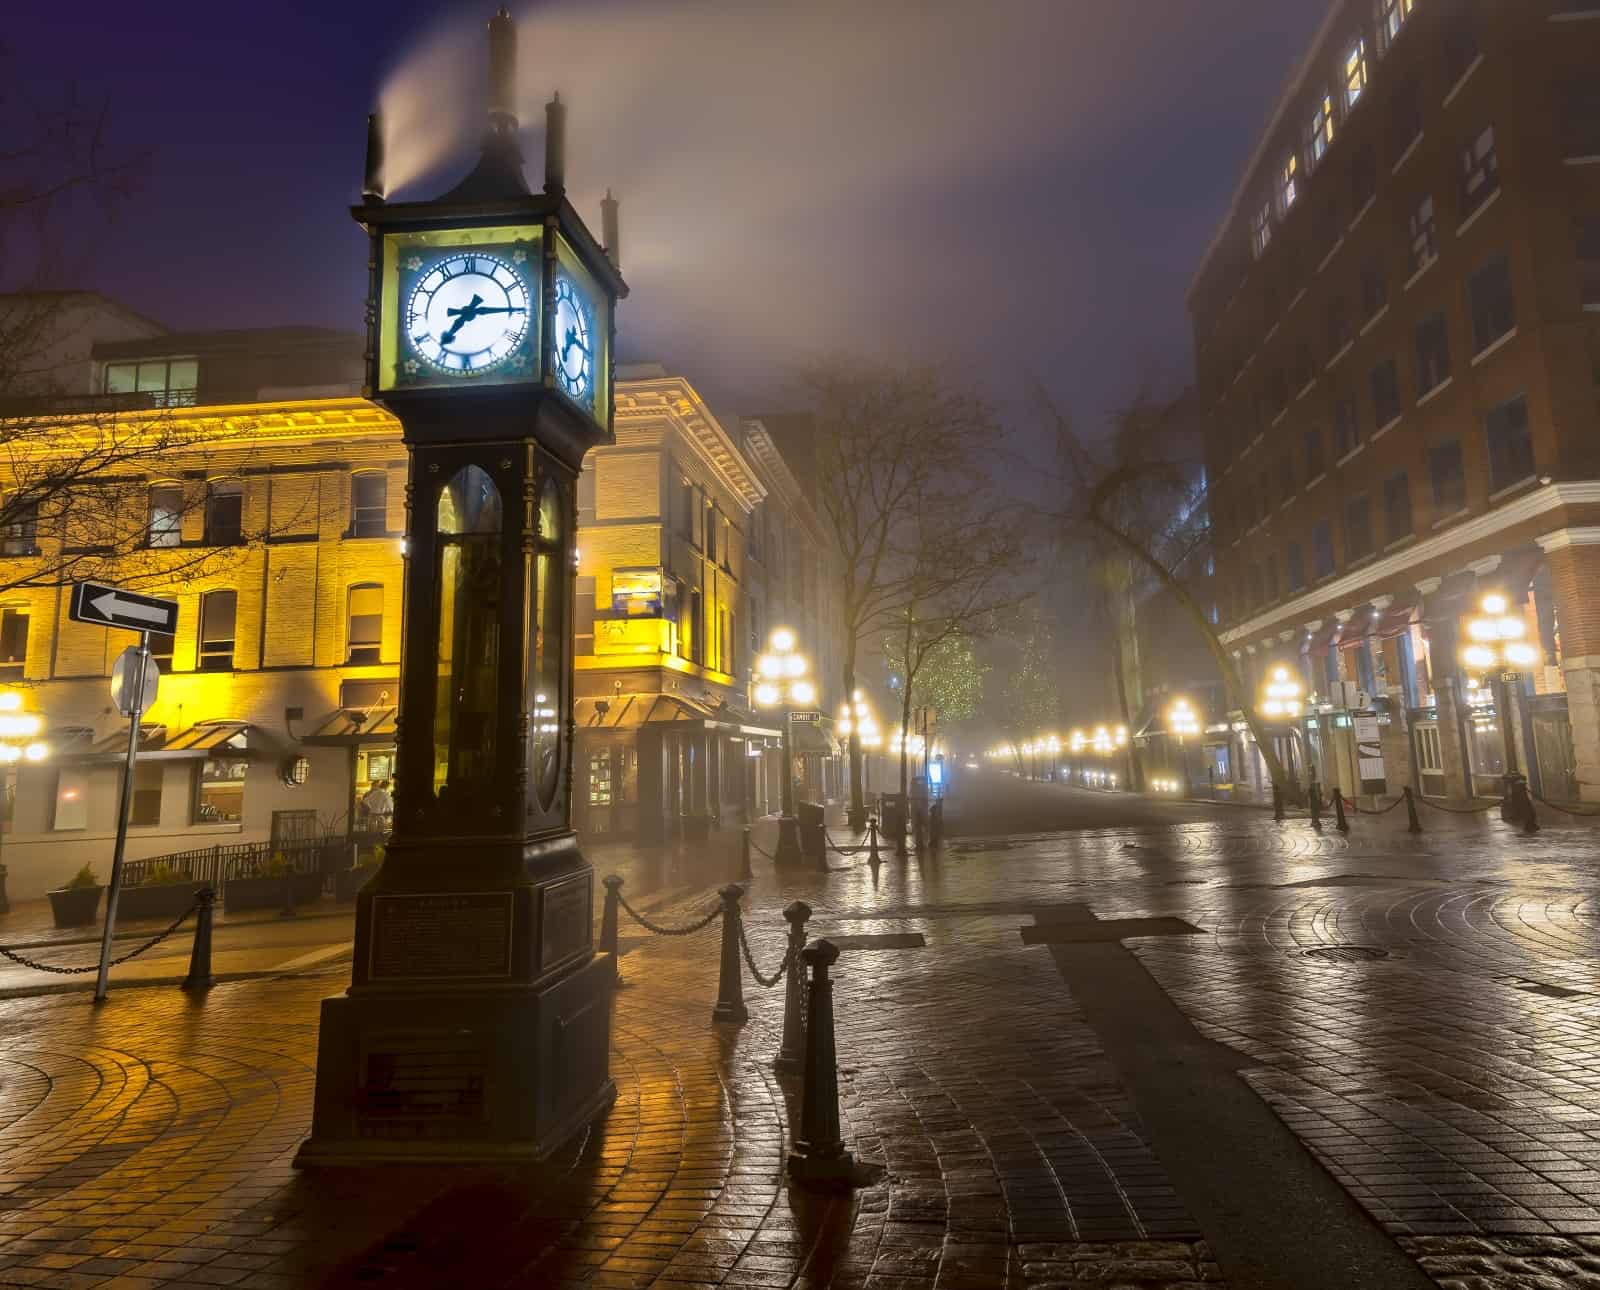 Vancouver Gastown mit der berühmten Steam-Clock Foto JamesWheeler